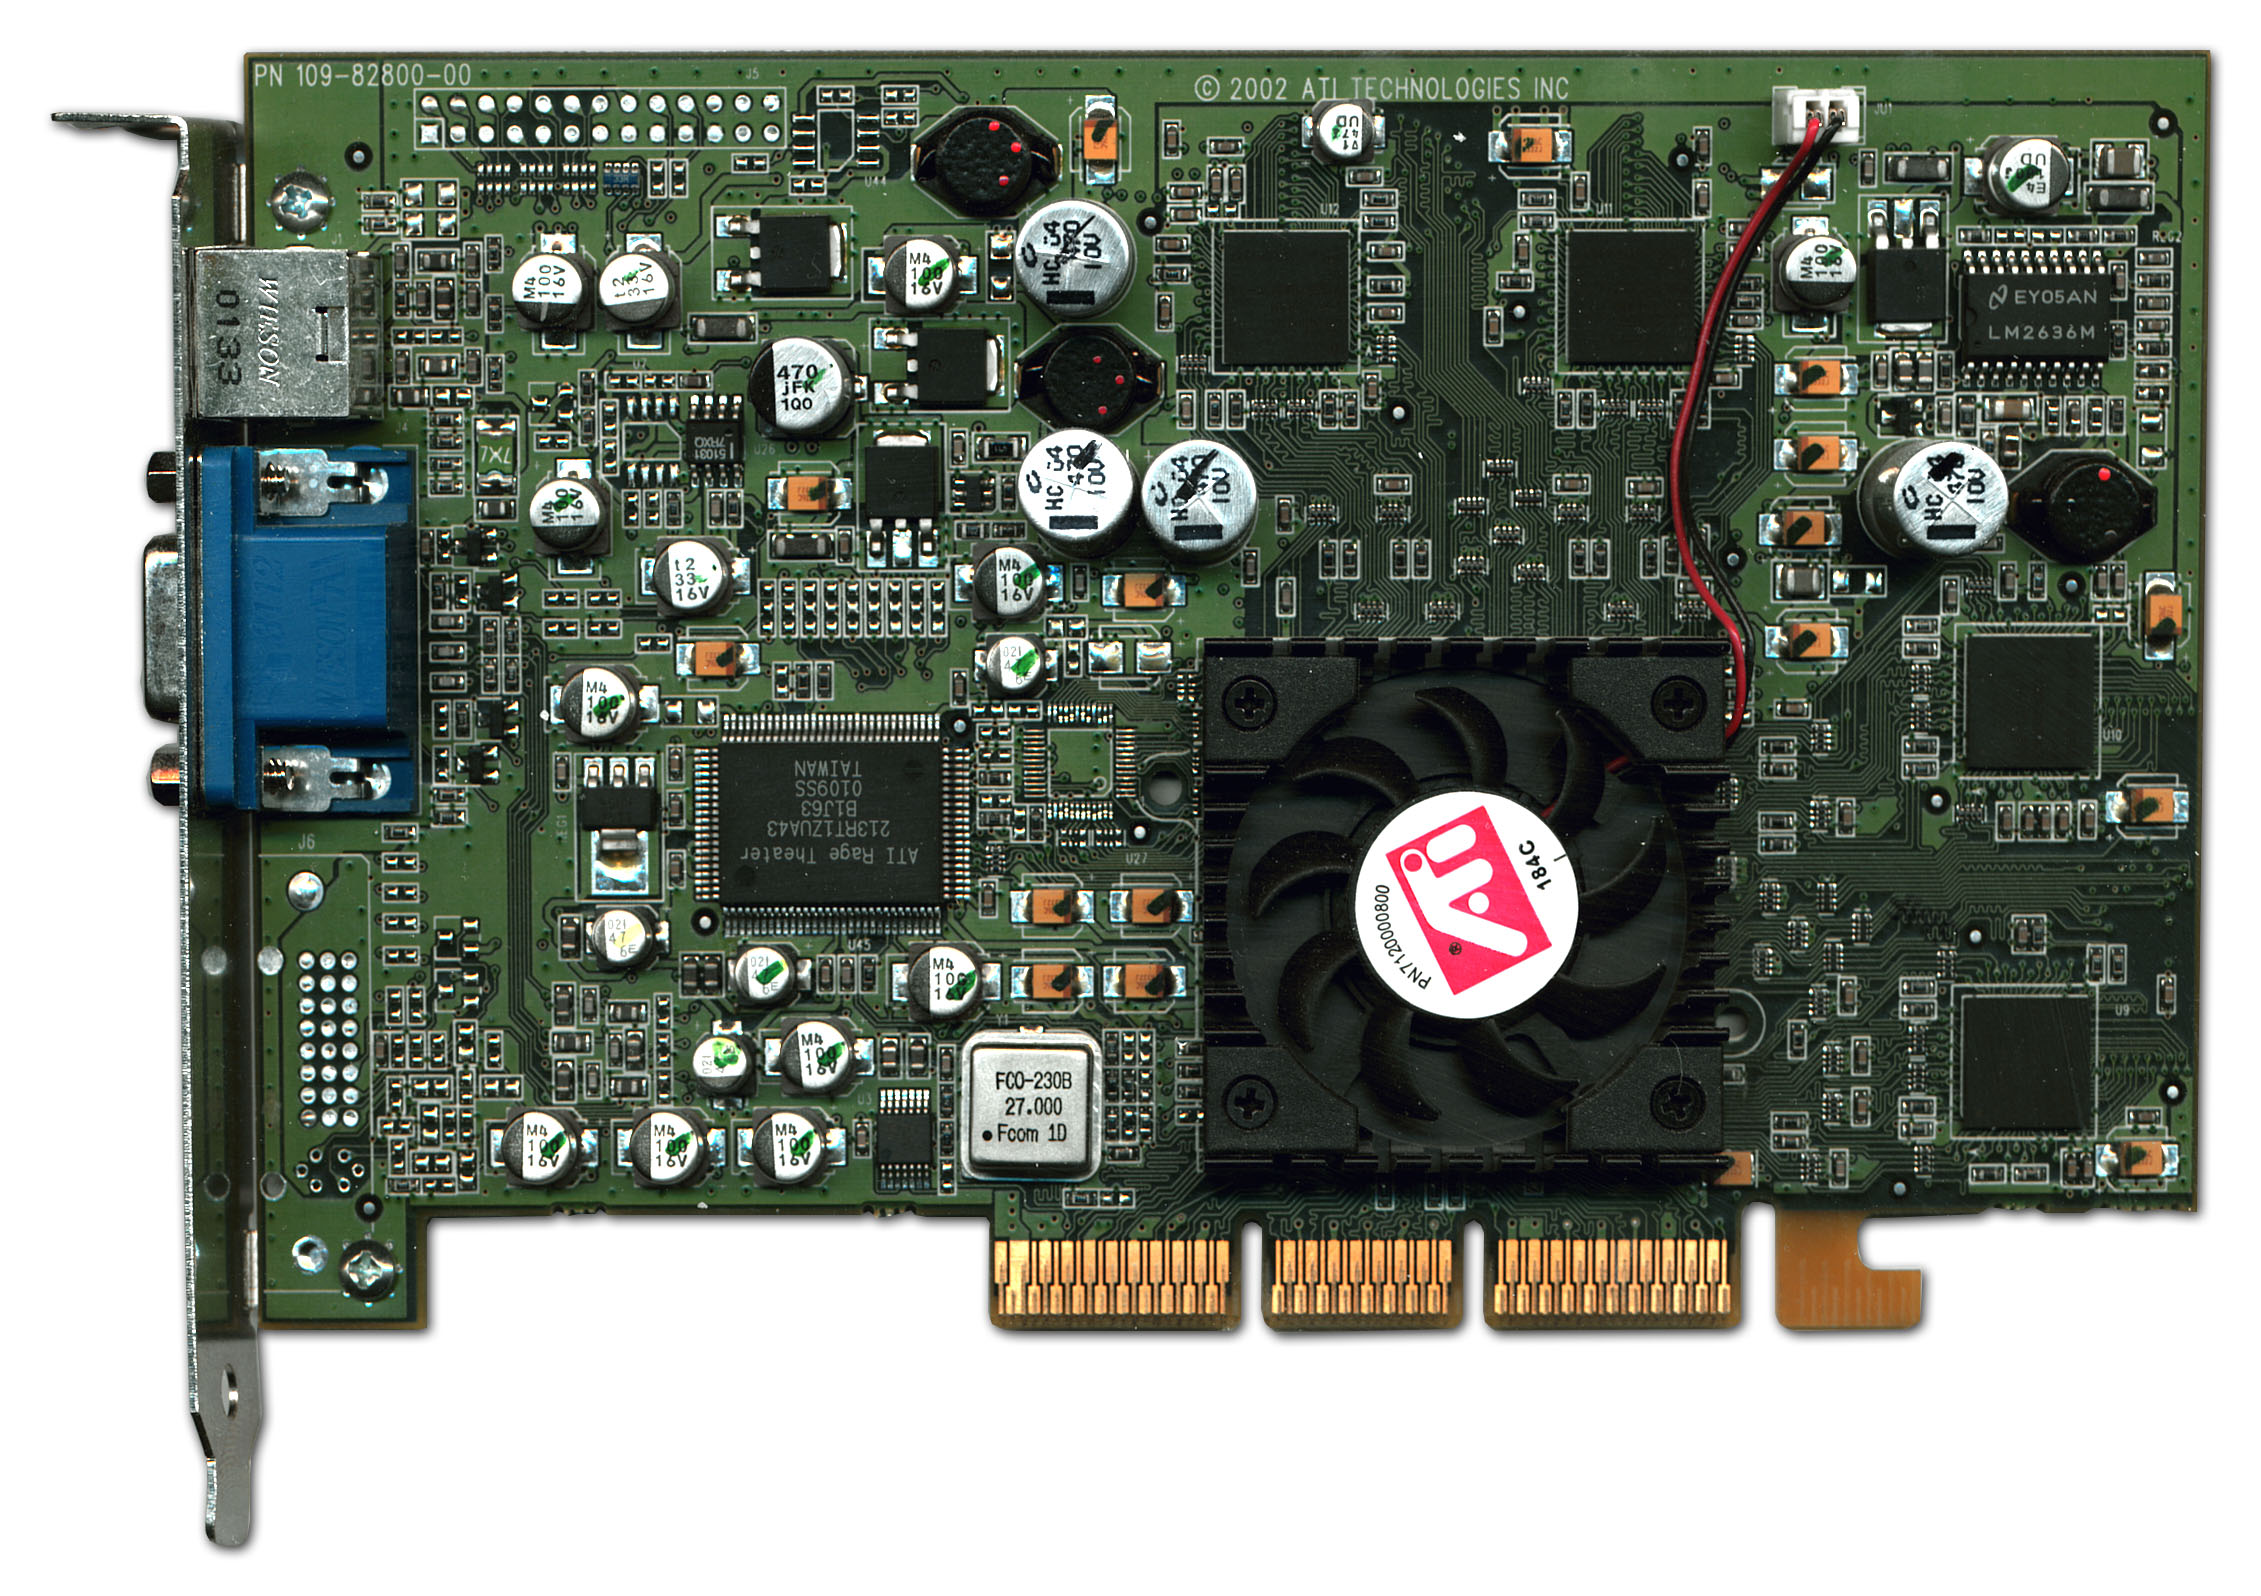 ATI Radeon 9600 Pro 128mb. Radeon 9500 Pro. Sapphire Radeon 9600. Radeon x1300 128mb. Ati radeon 9600